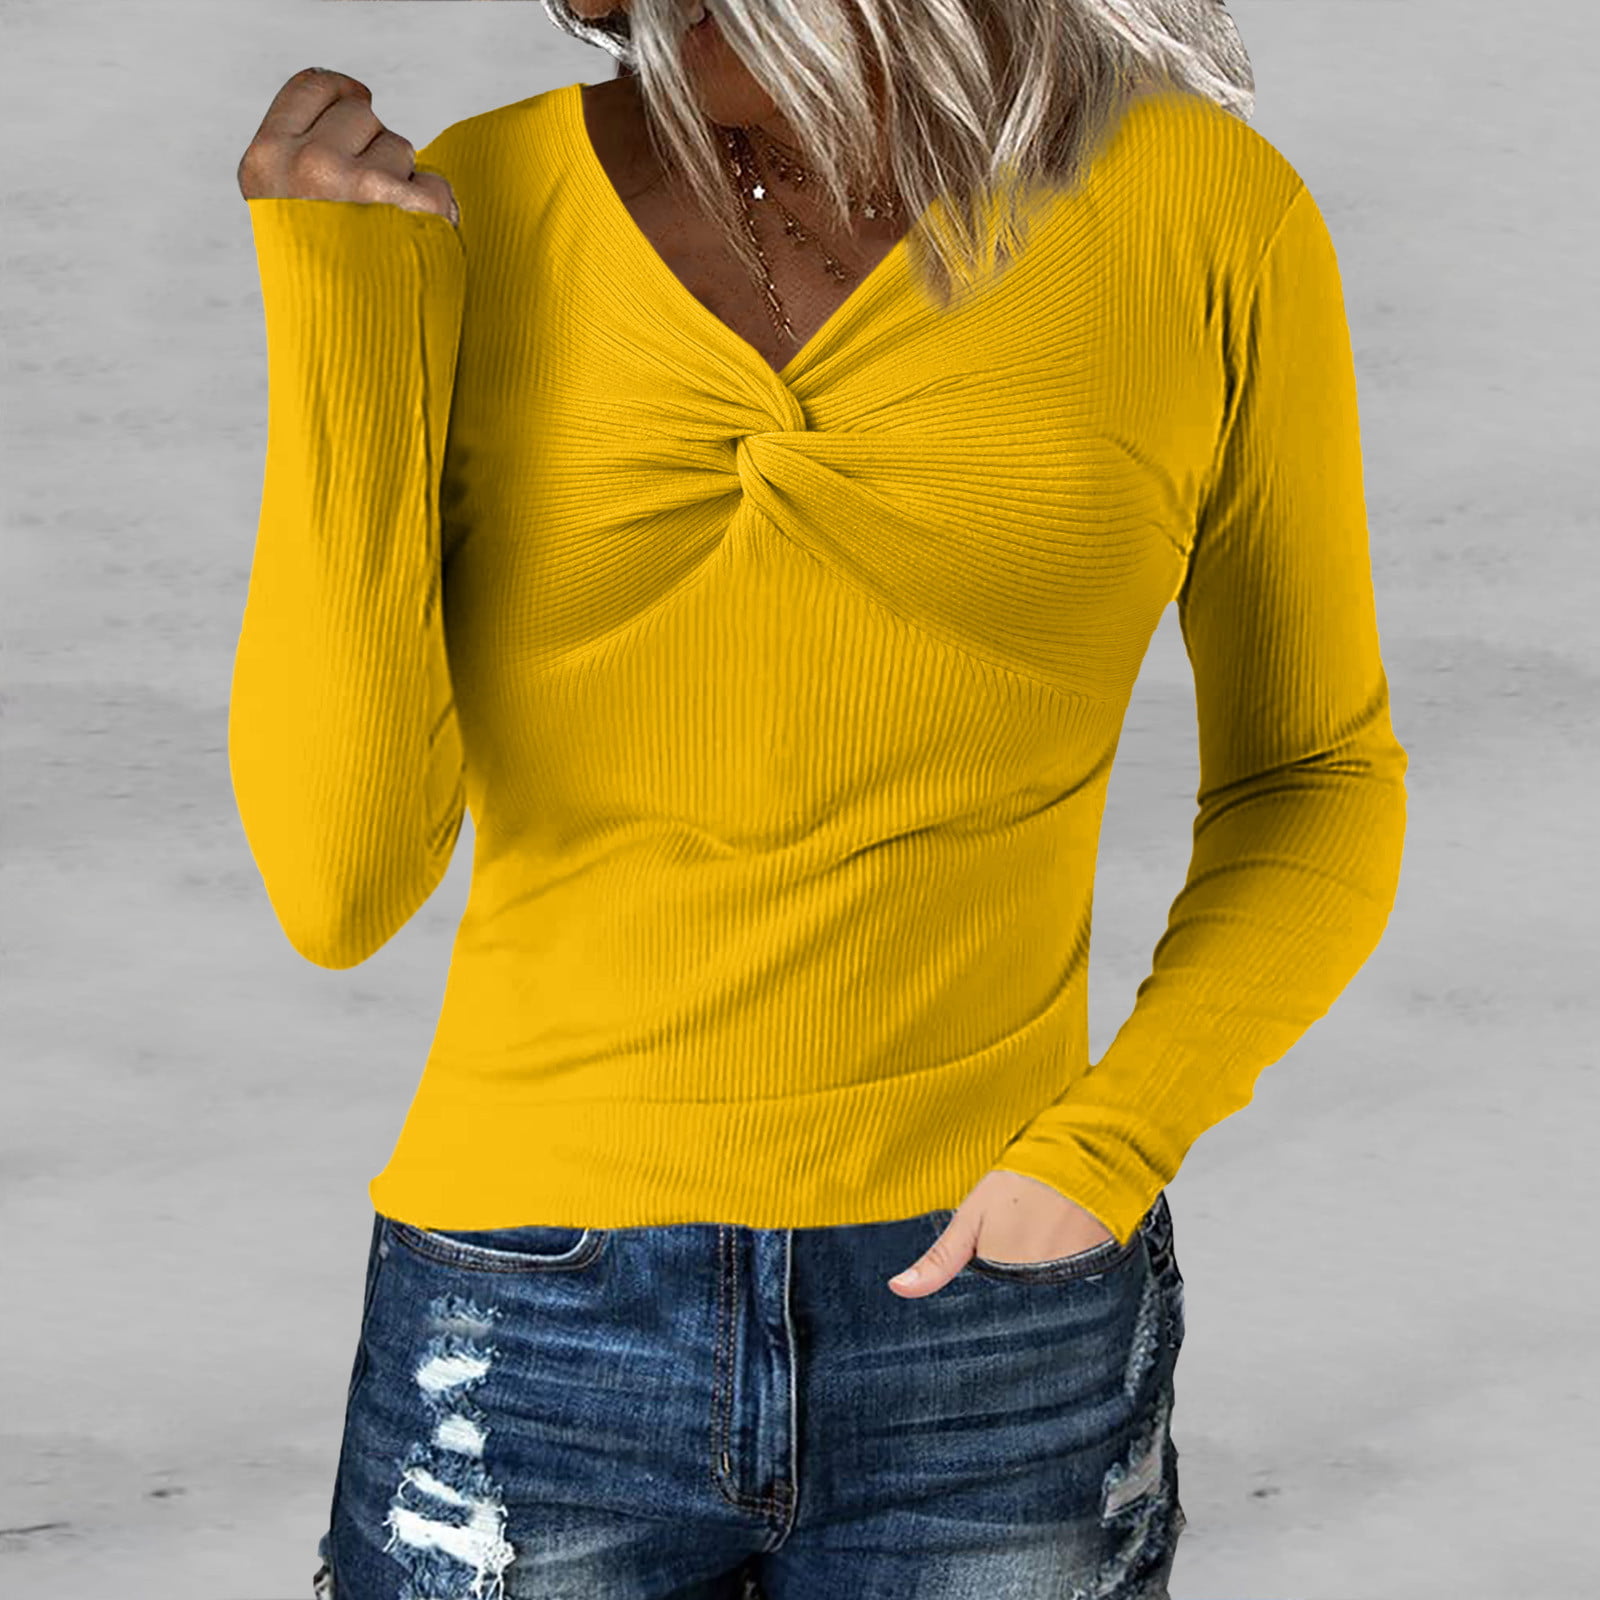 Entyinea Womens Tops Casual Long Sleeve Solid Slim Fit Tee Shirt Yellow S 